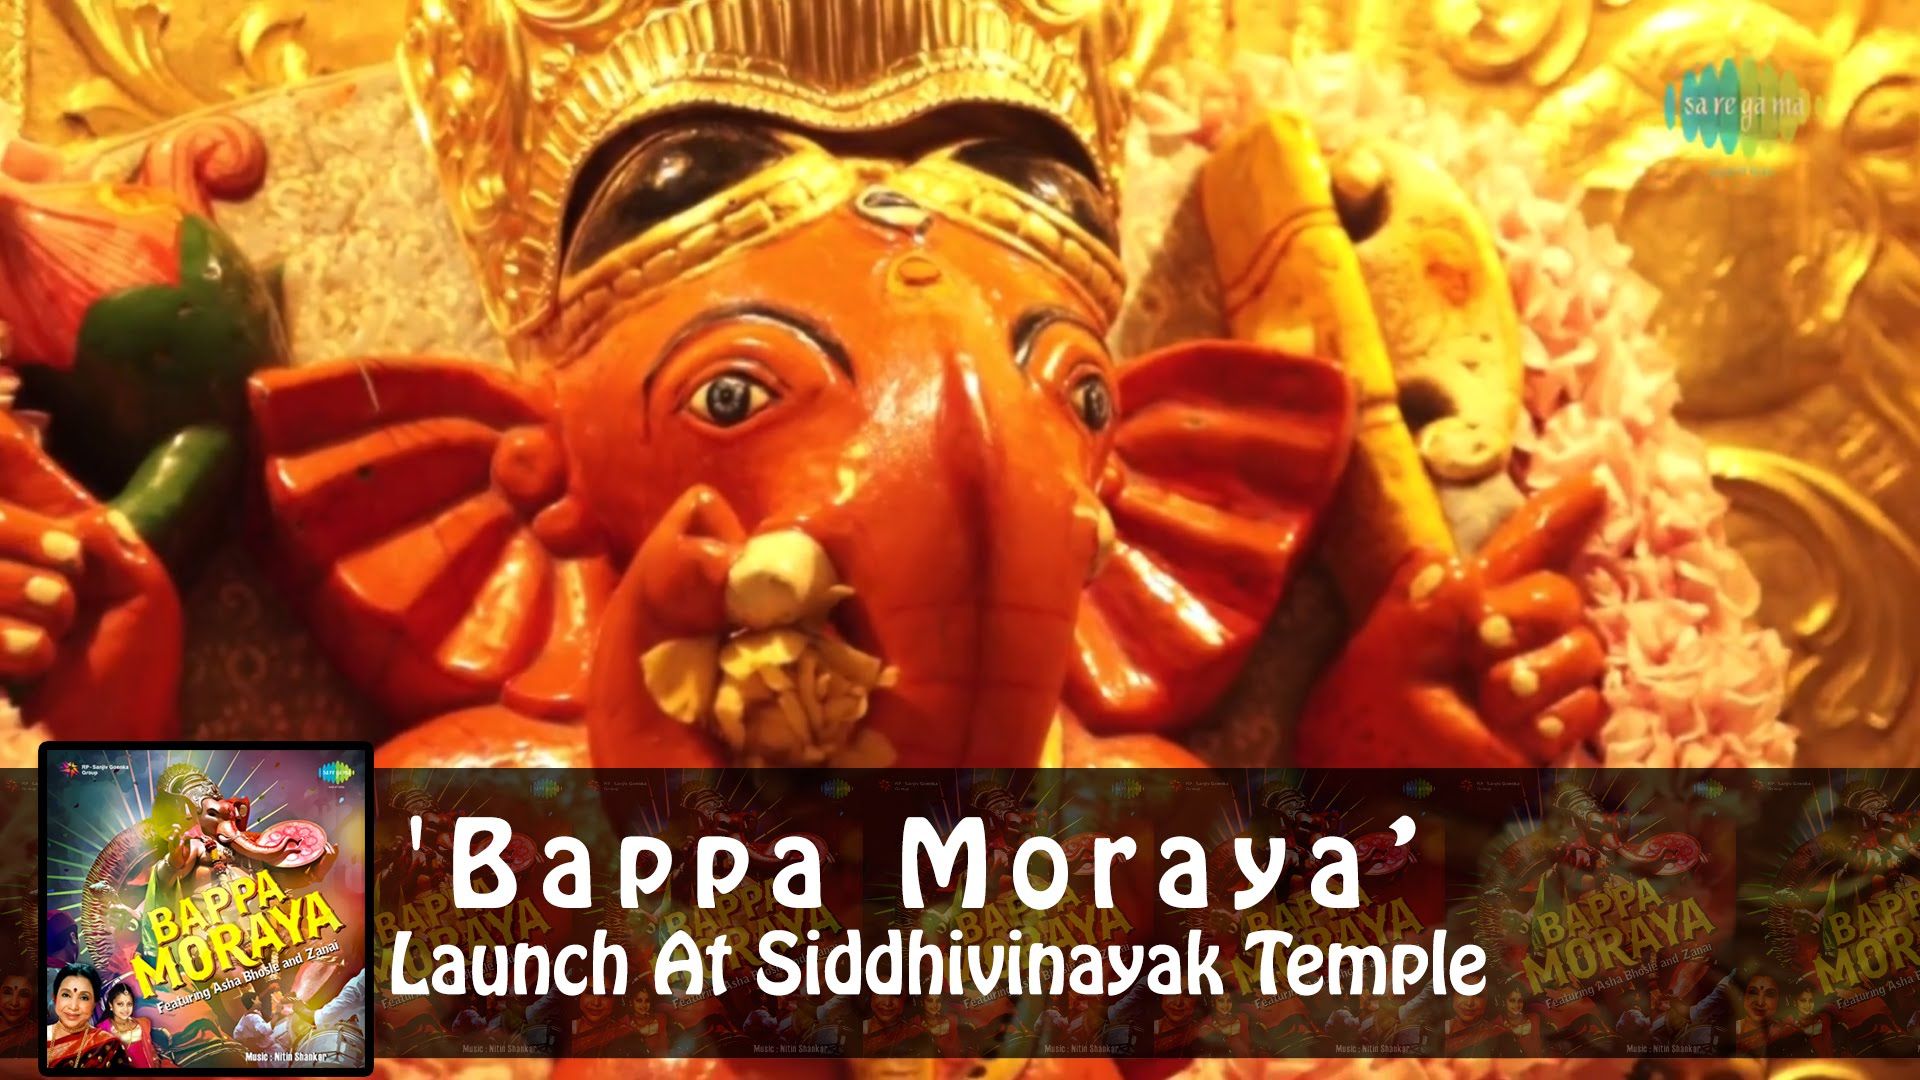 Bappa Moraya' Launch At Siddhivinayak Temple , HD Wallpaper & Backgrounds